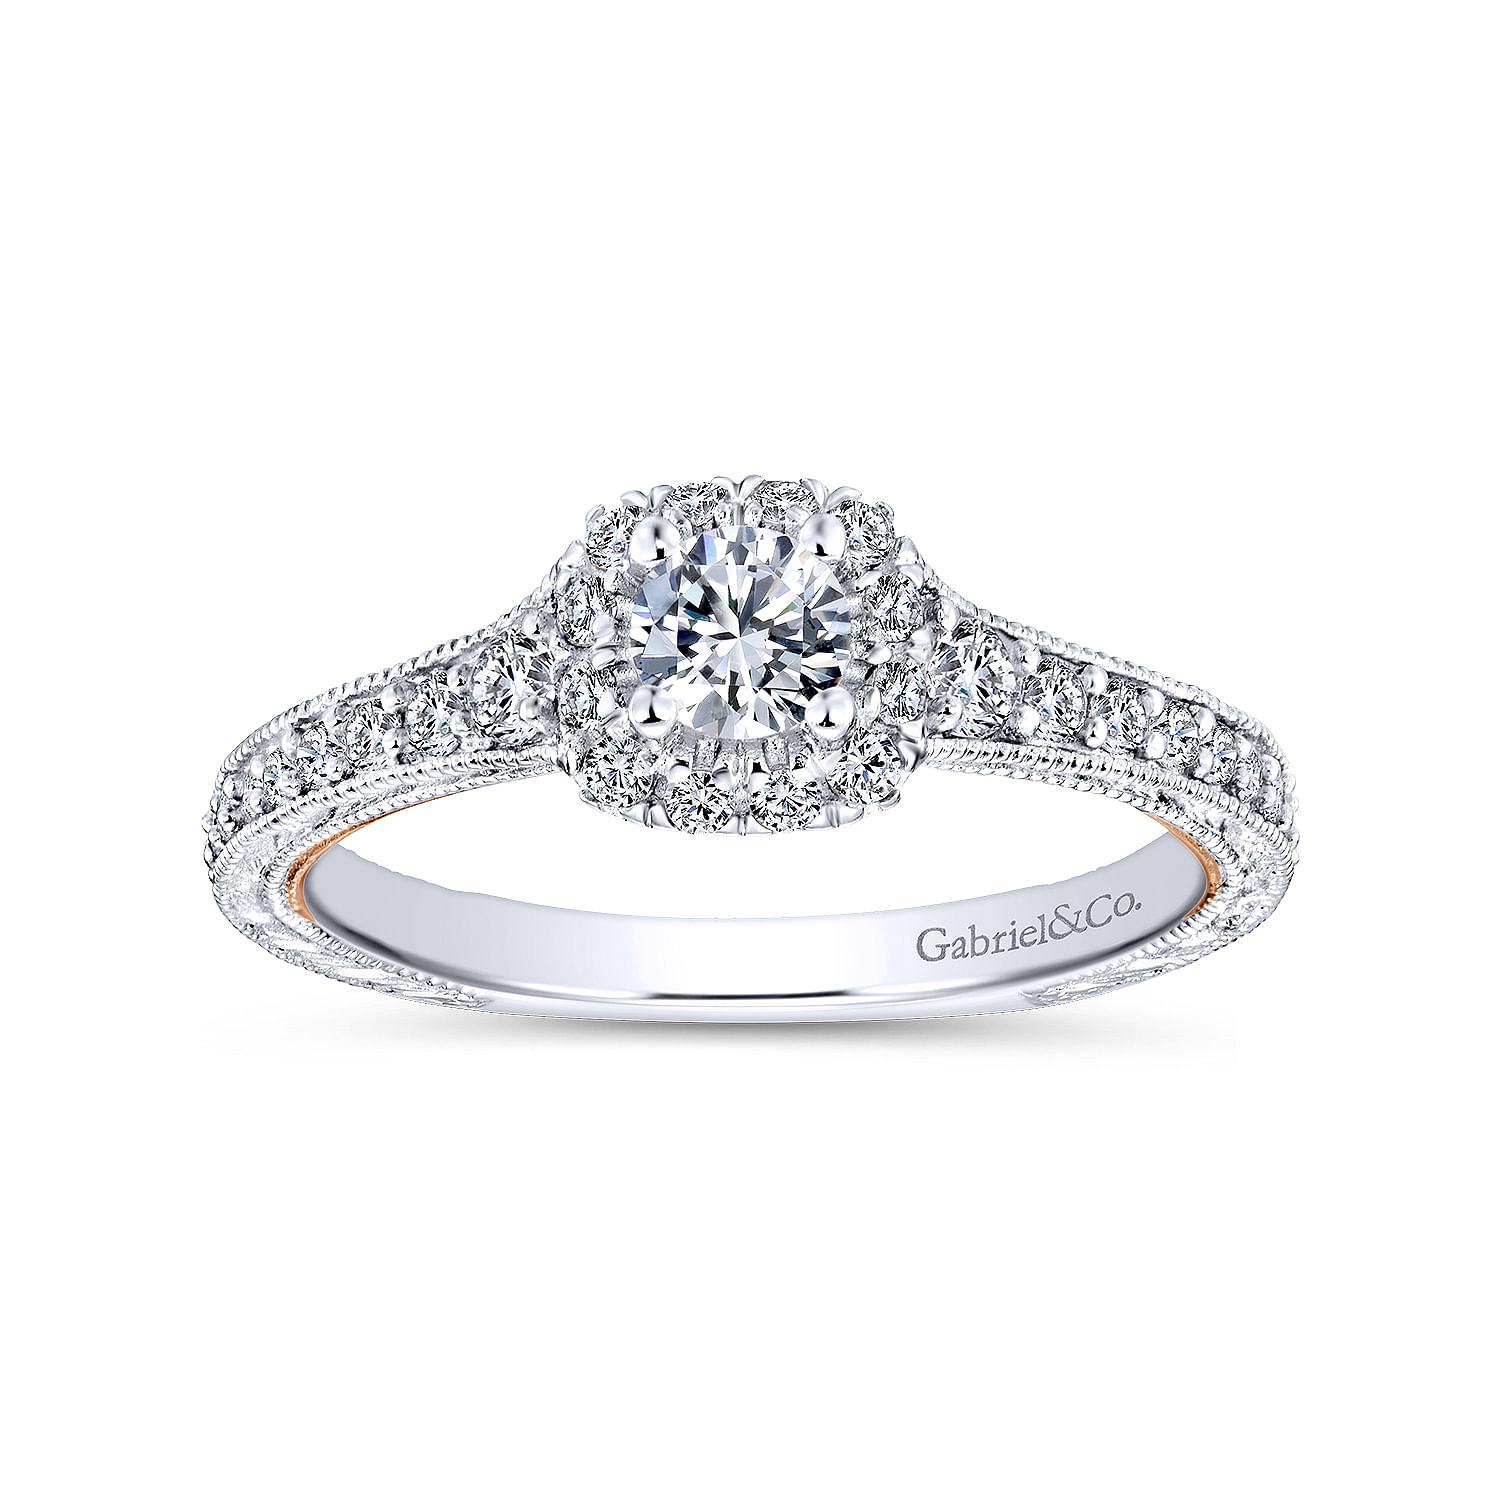 Vintage Inspired 14K White-Rose Gold Cushion Halo Round Diamond Engagement Ring